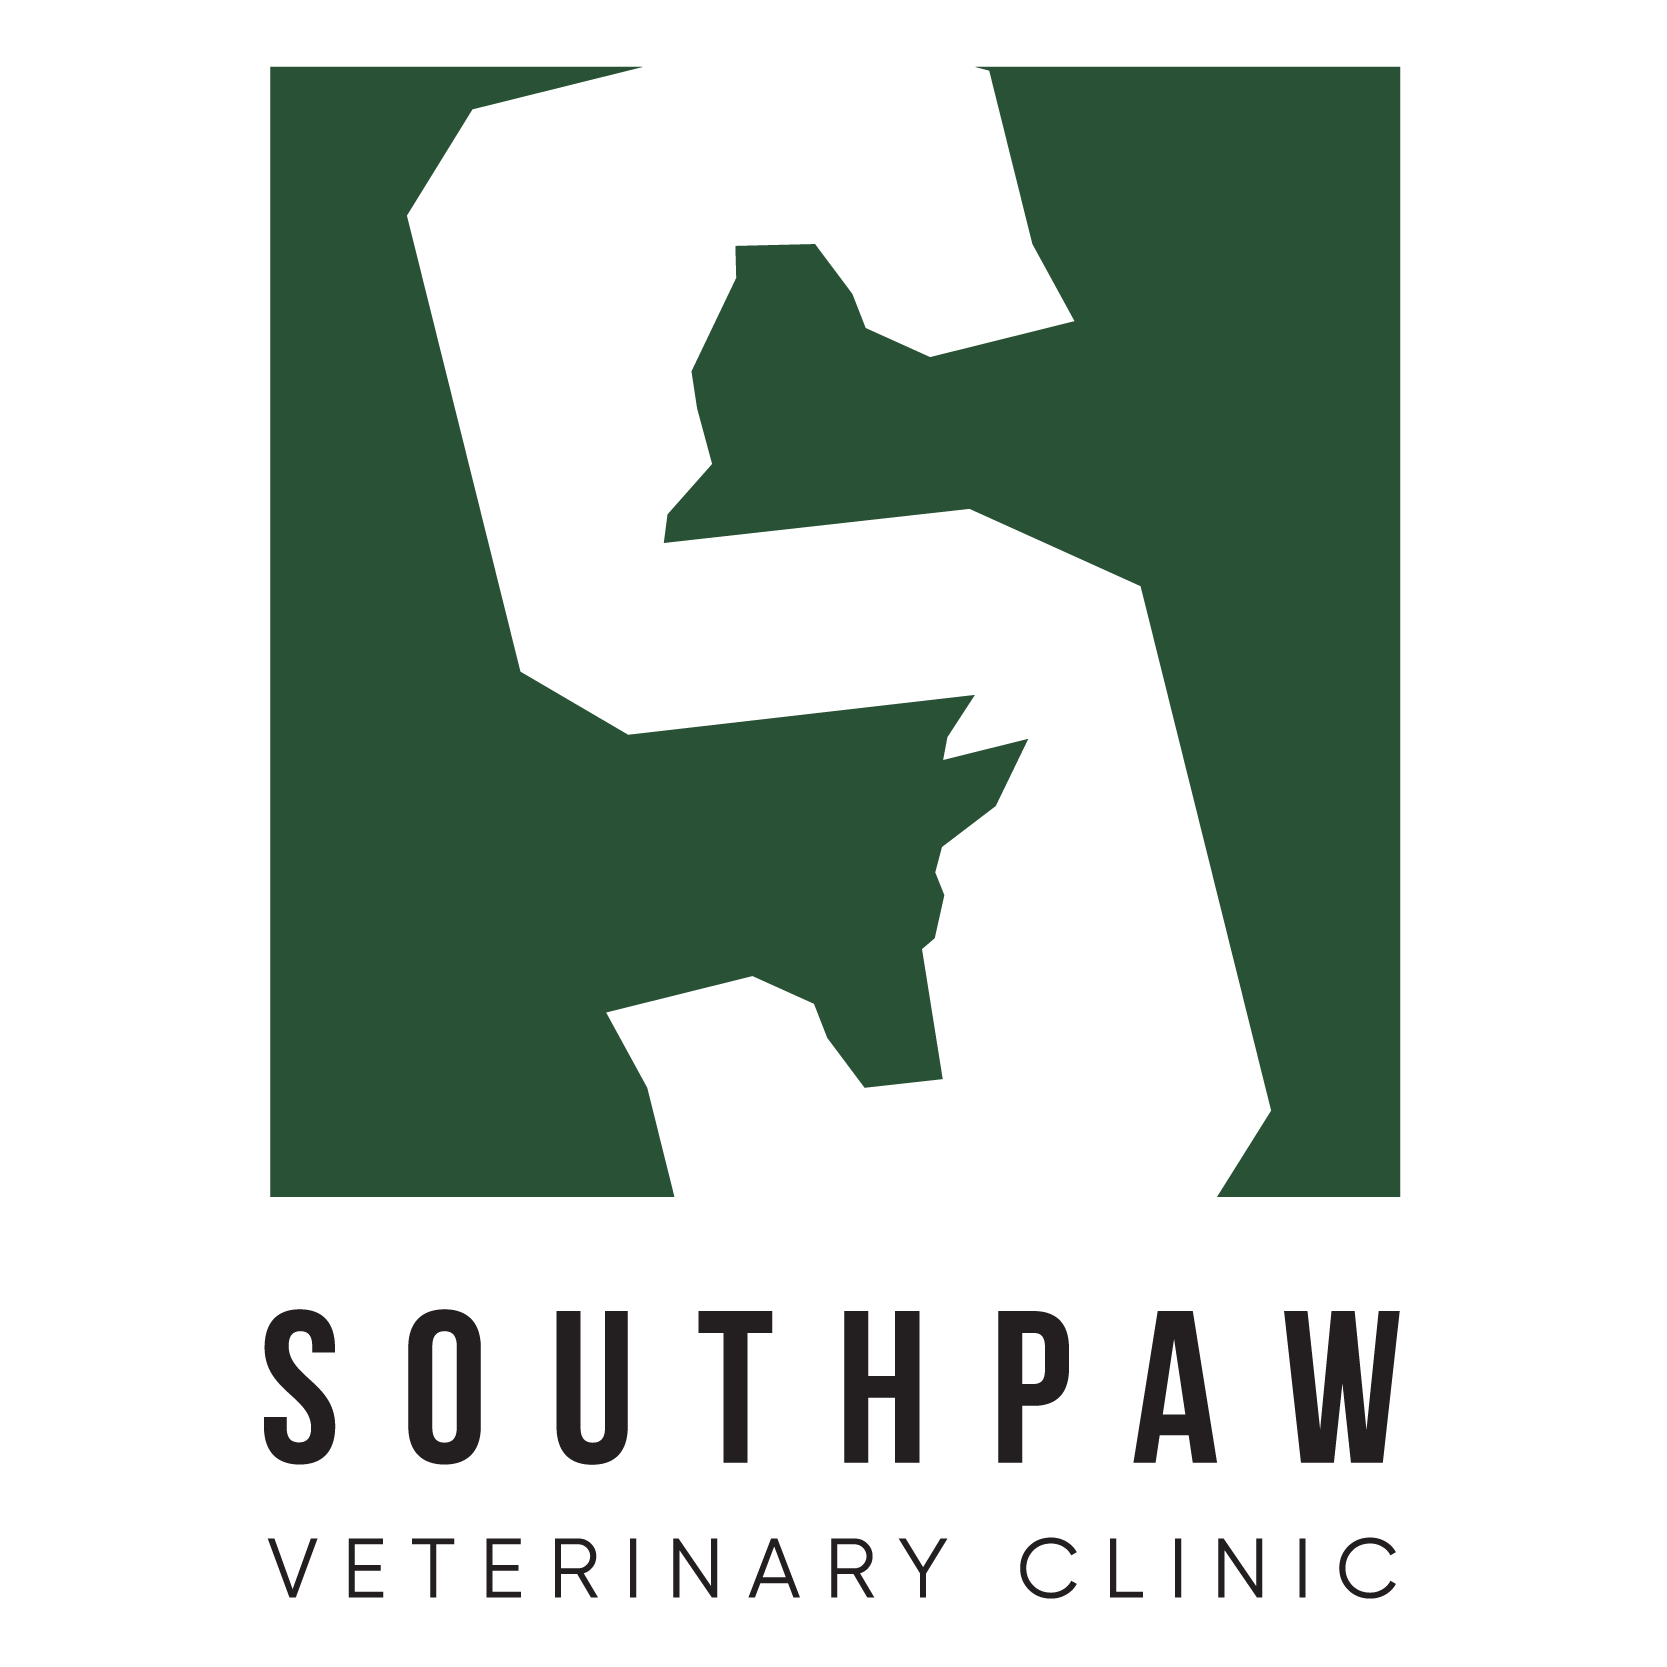 Southpaw Veterinary Clinic